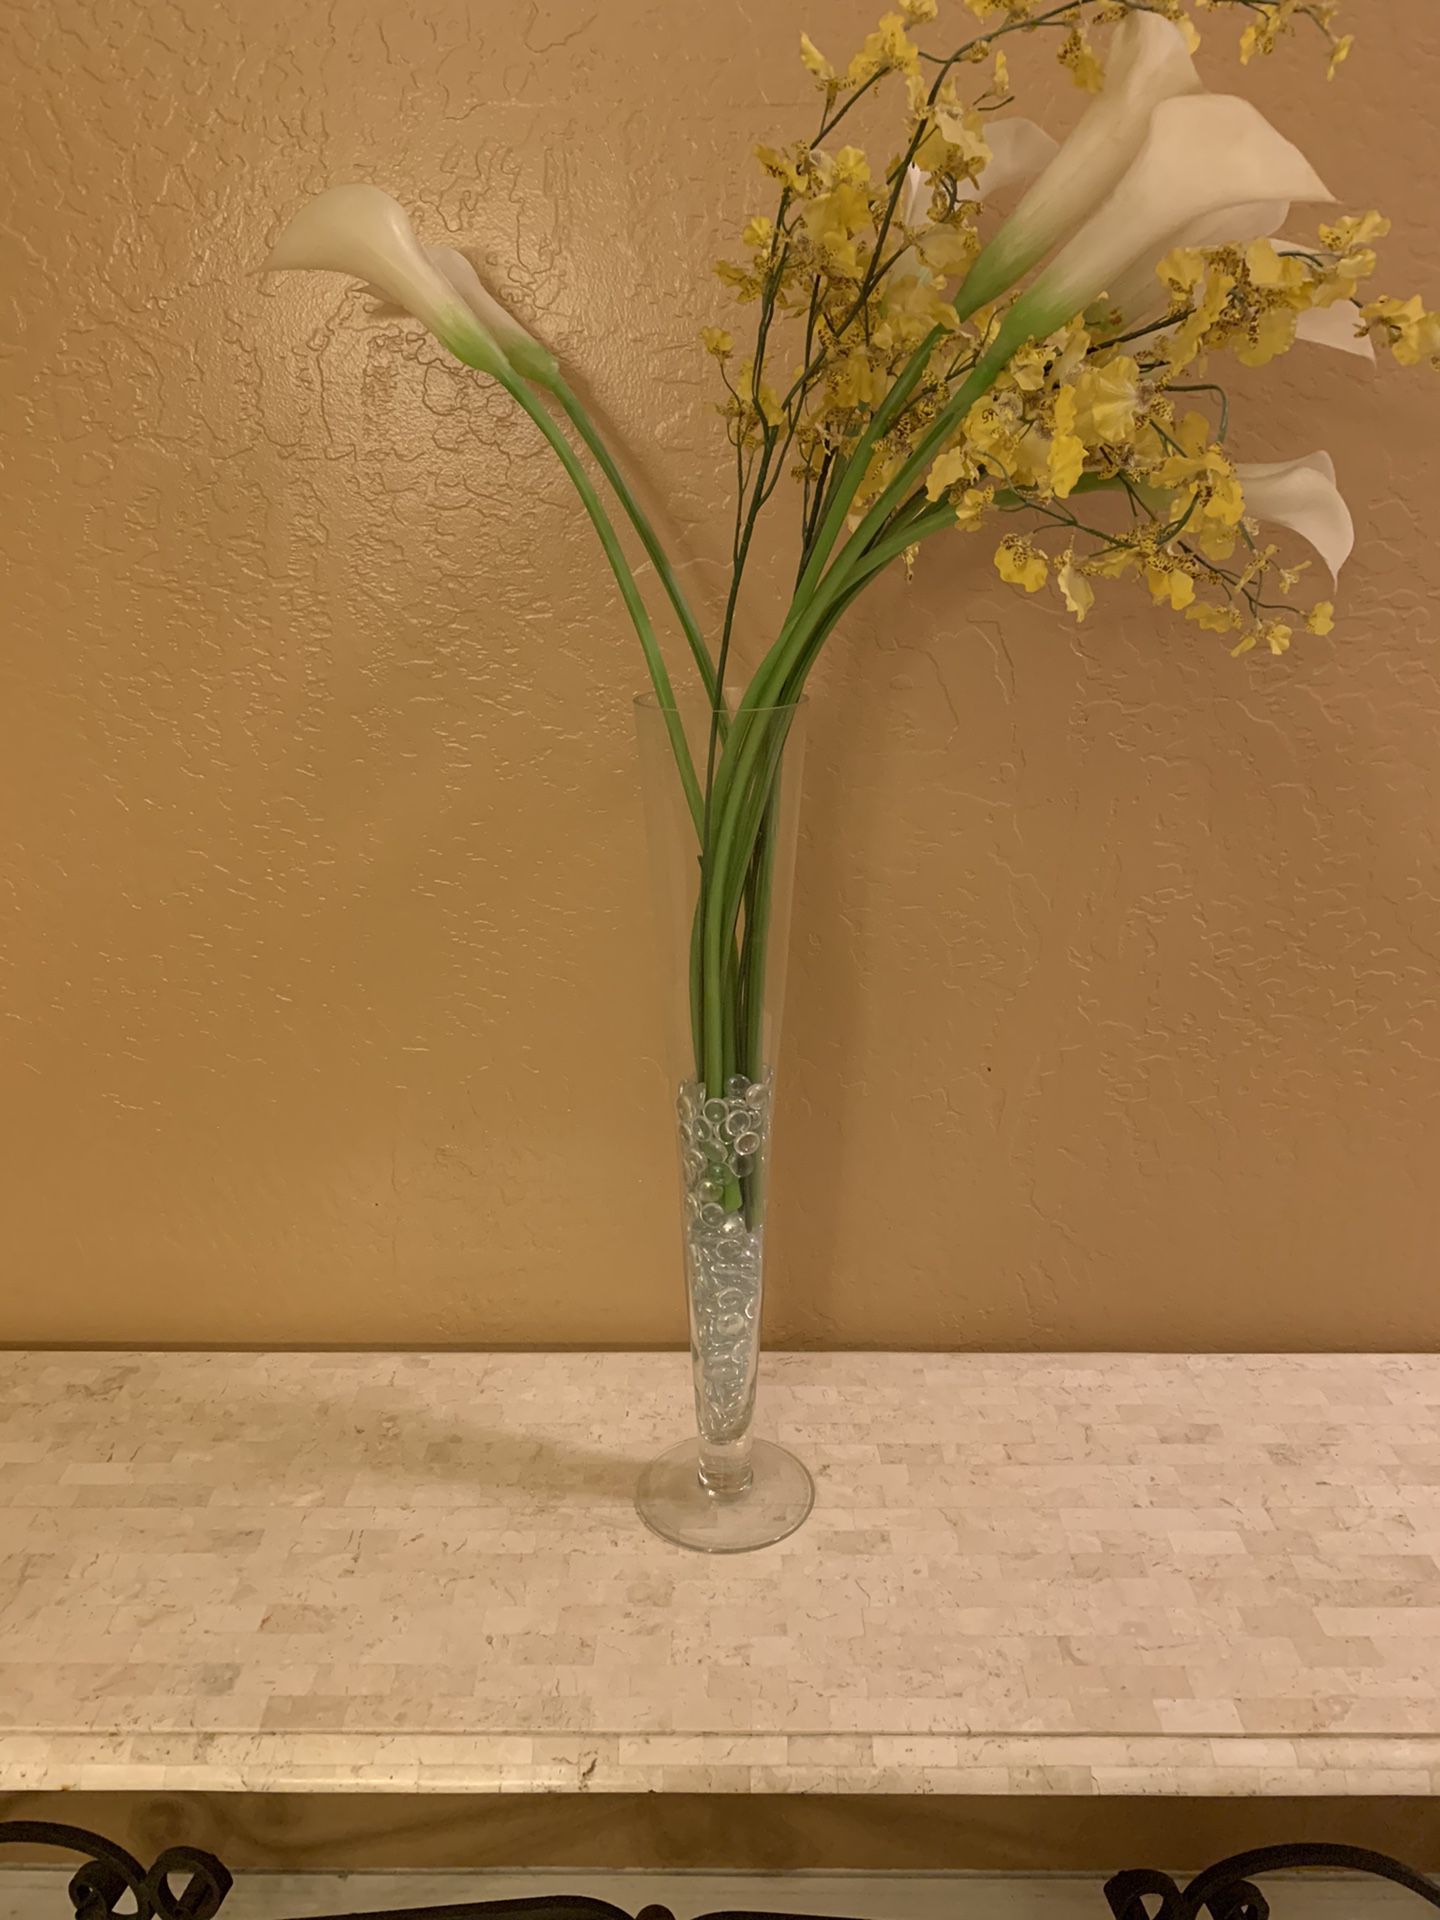 Tall decorative glass vase